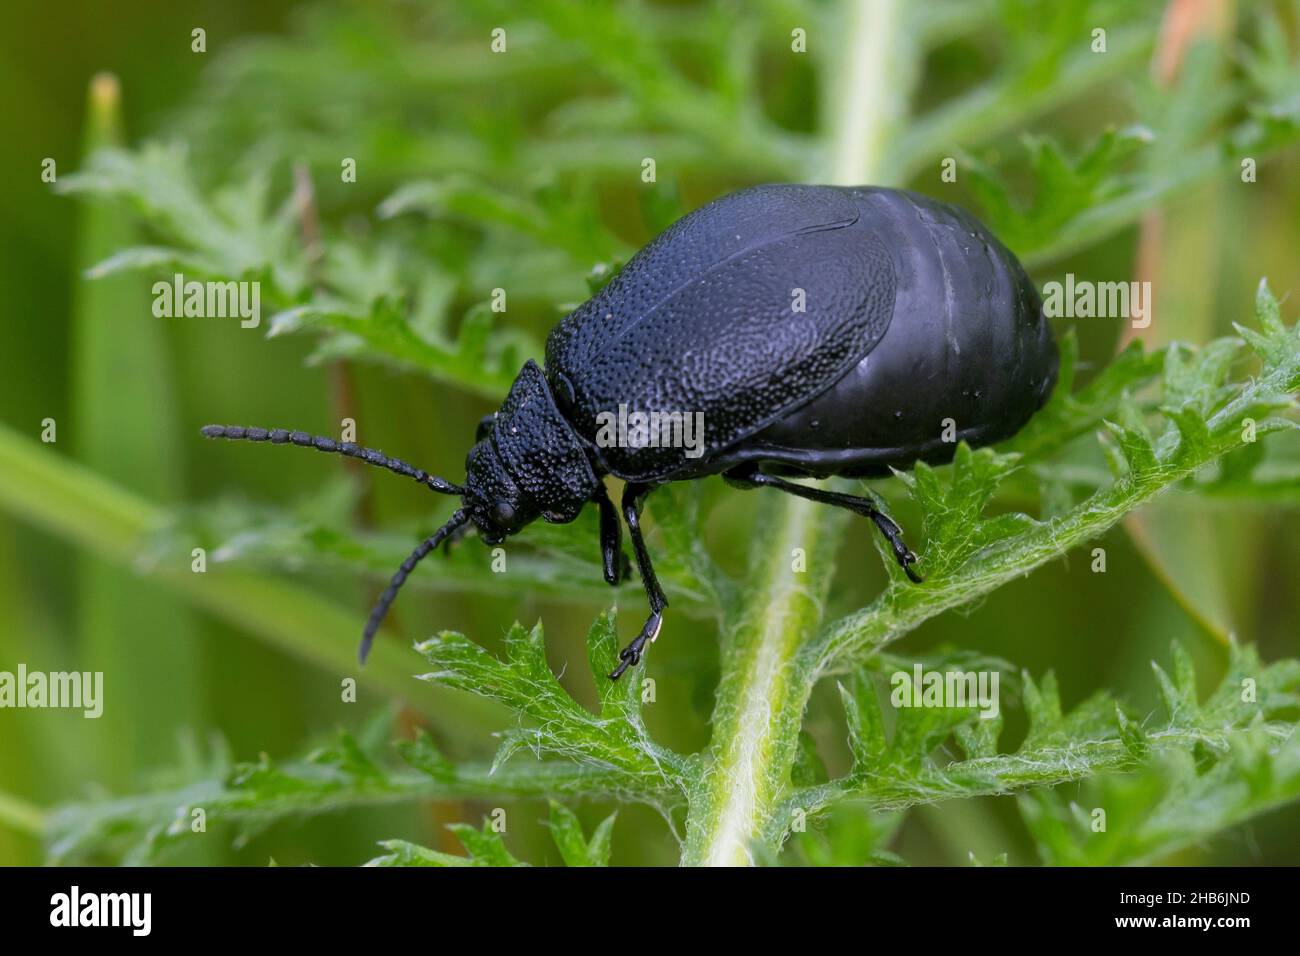 tansy beetle (Galeruca tanaceti), female sits on a leaf, Germany Stock Photo